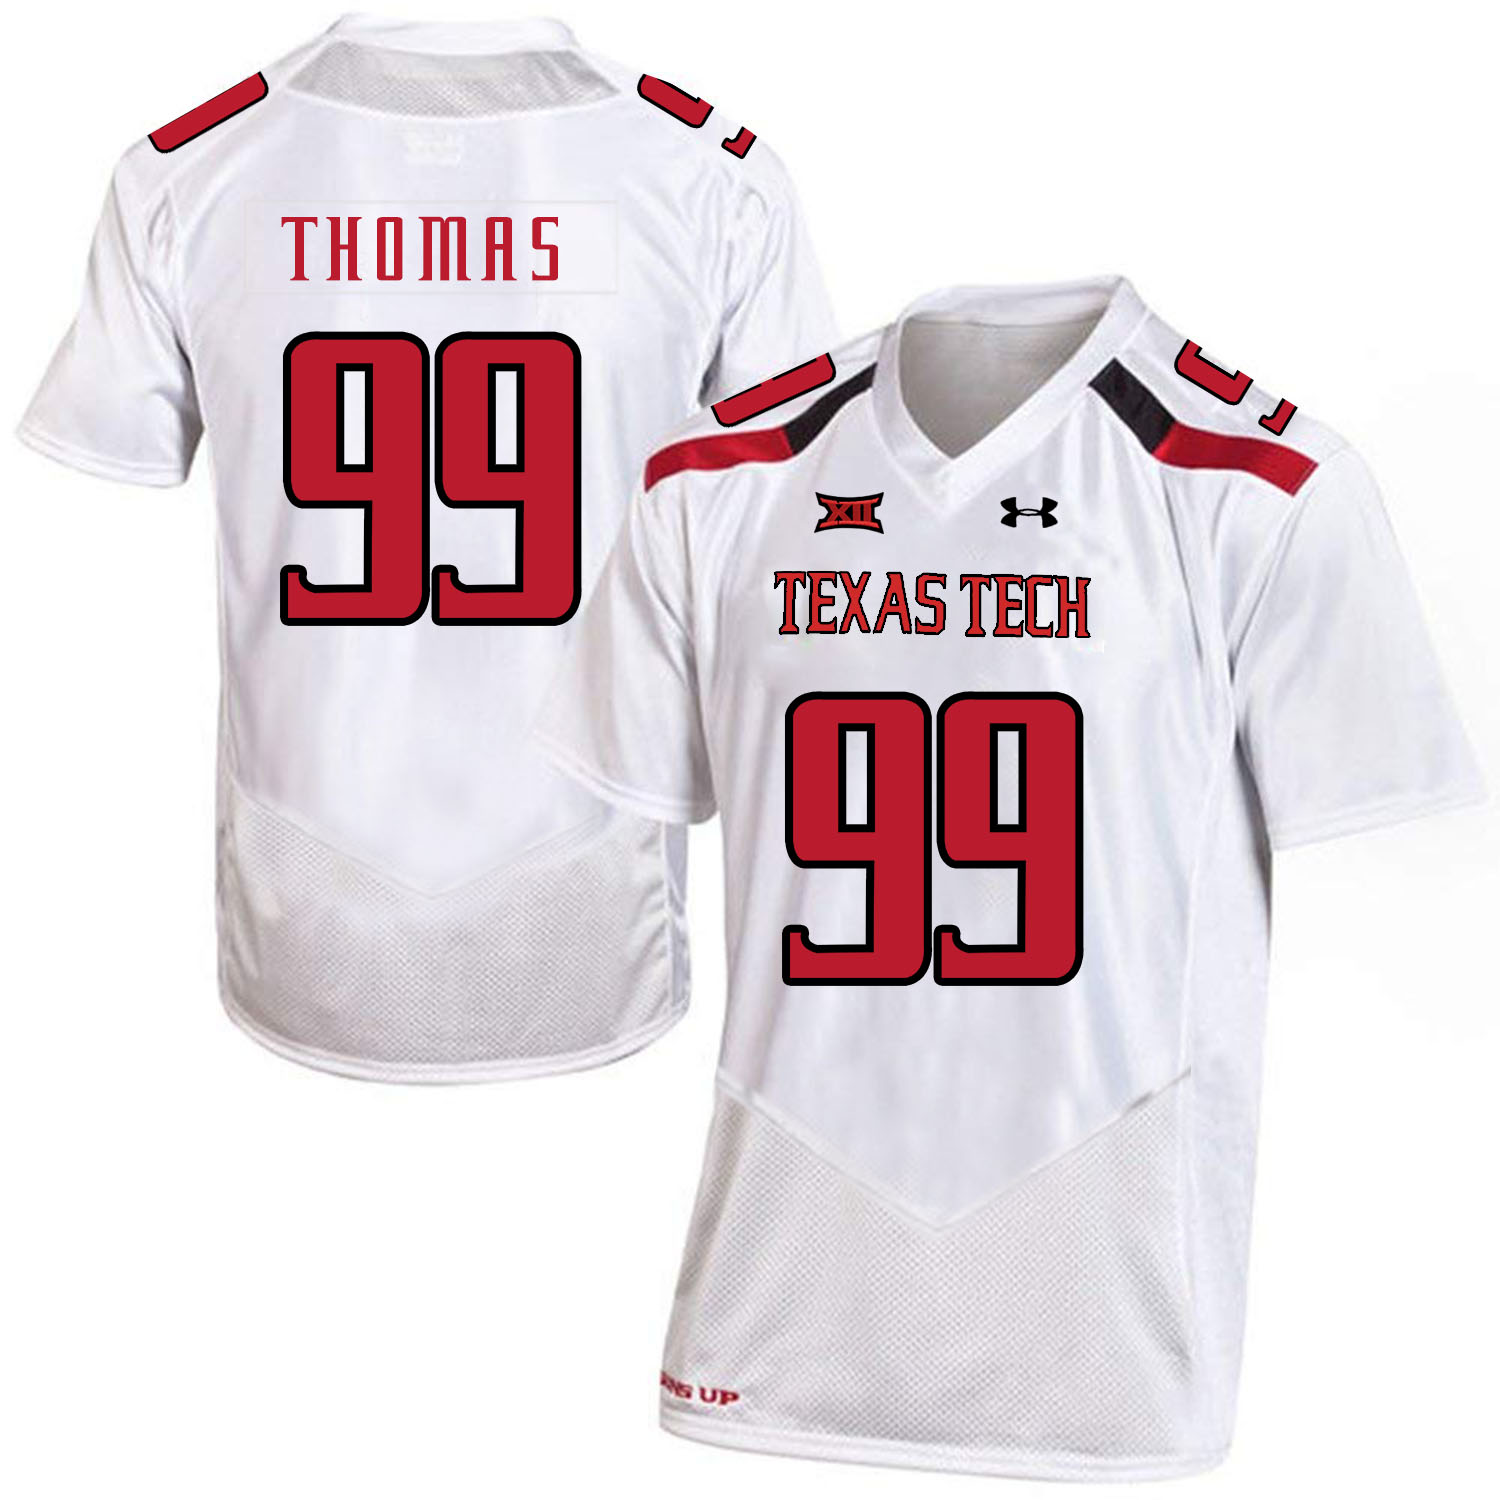 Texas Tech Red Raiders 99 Mychealon Thomas White College Football Jersey